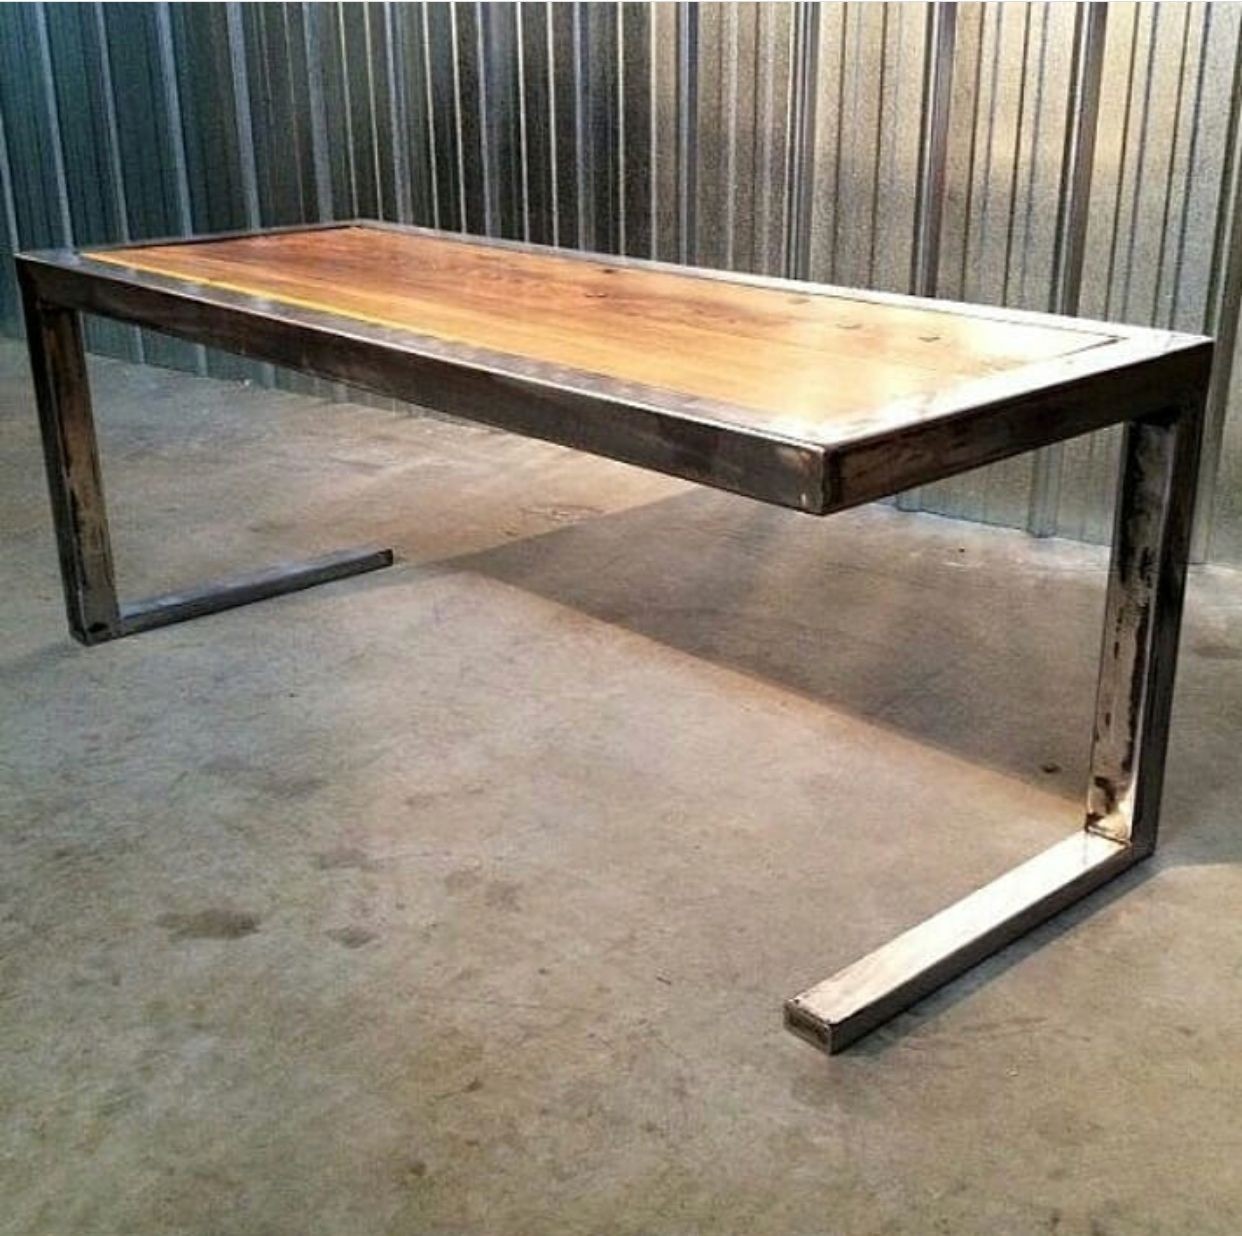 Handmade modern rustic coffee table with